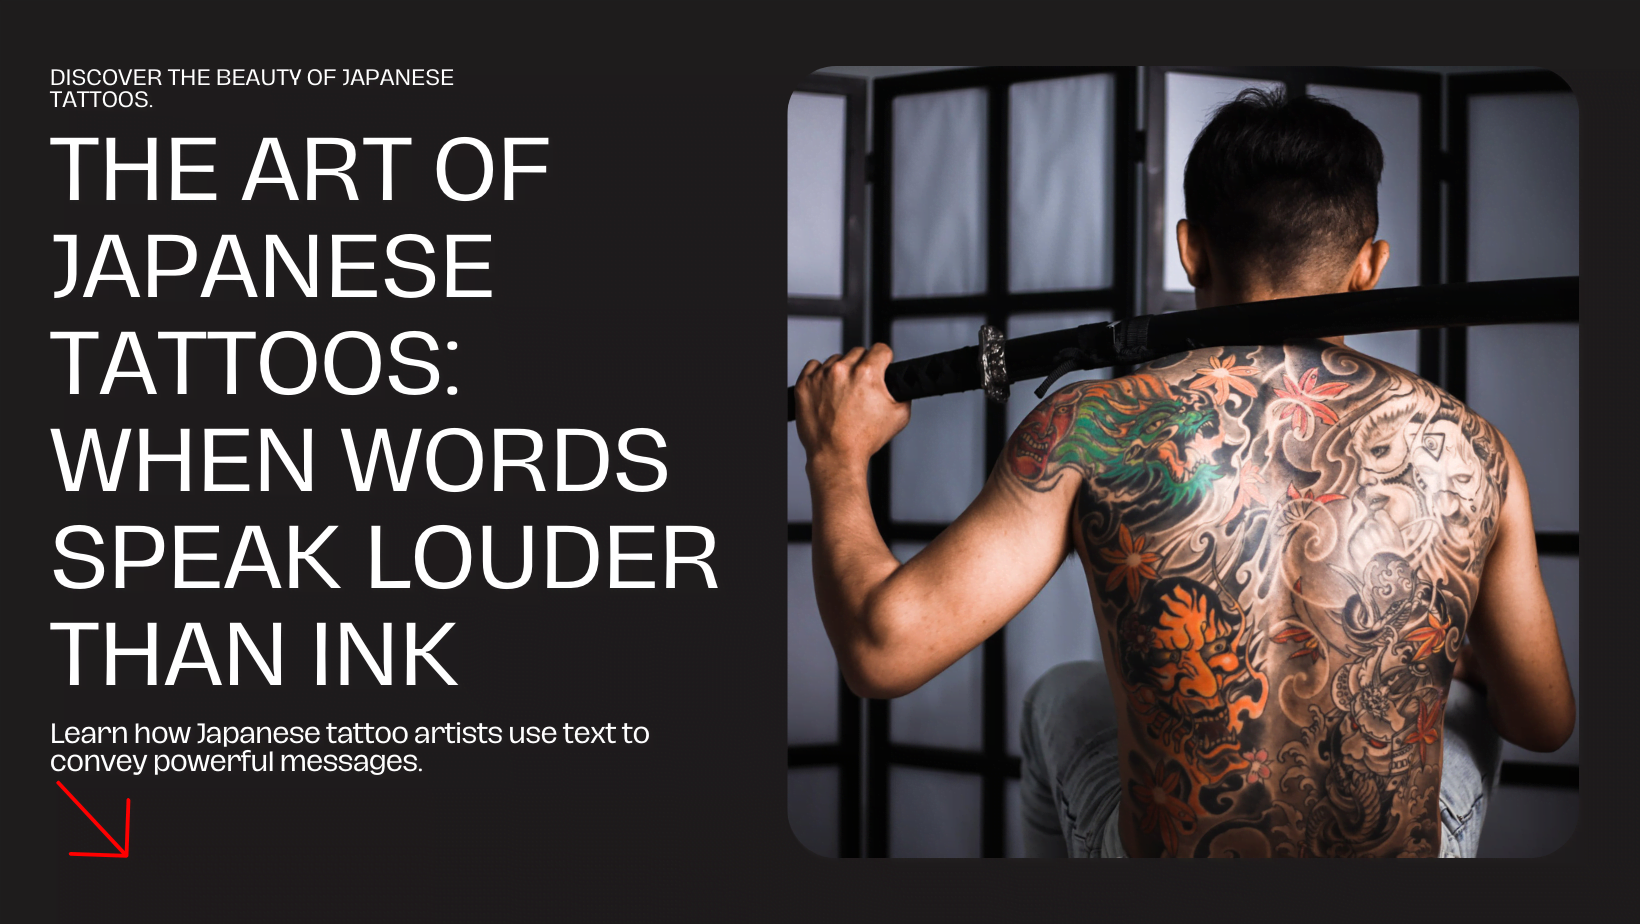 "In the art of Japanese tattoos, words speak louder than ink."